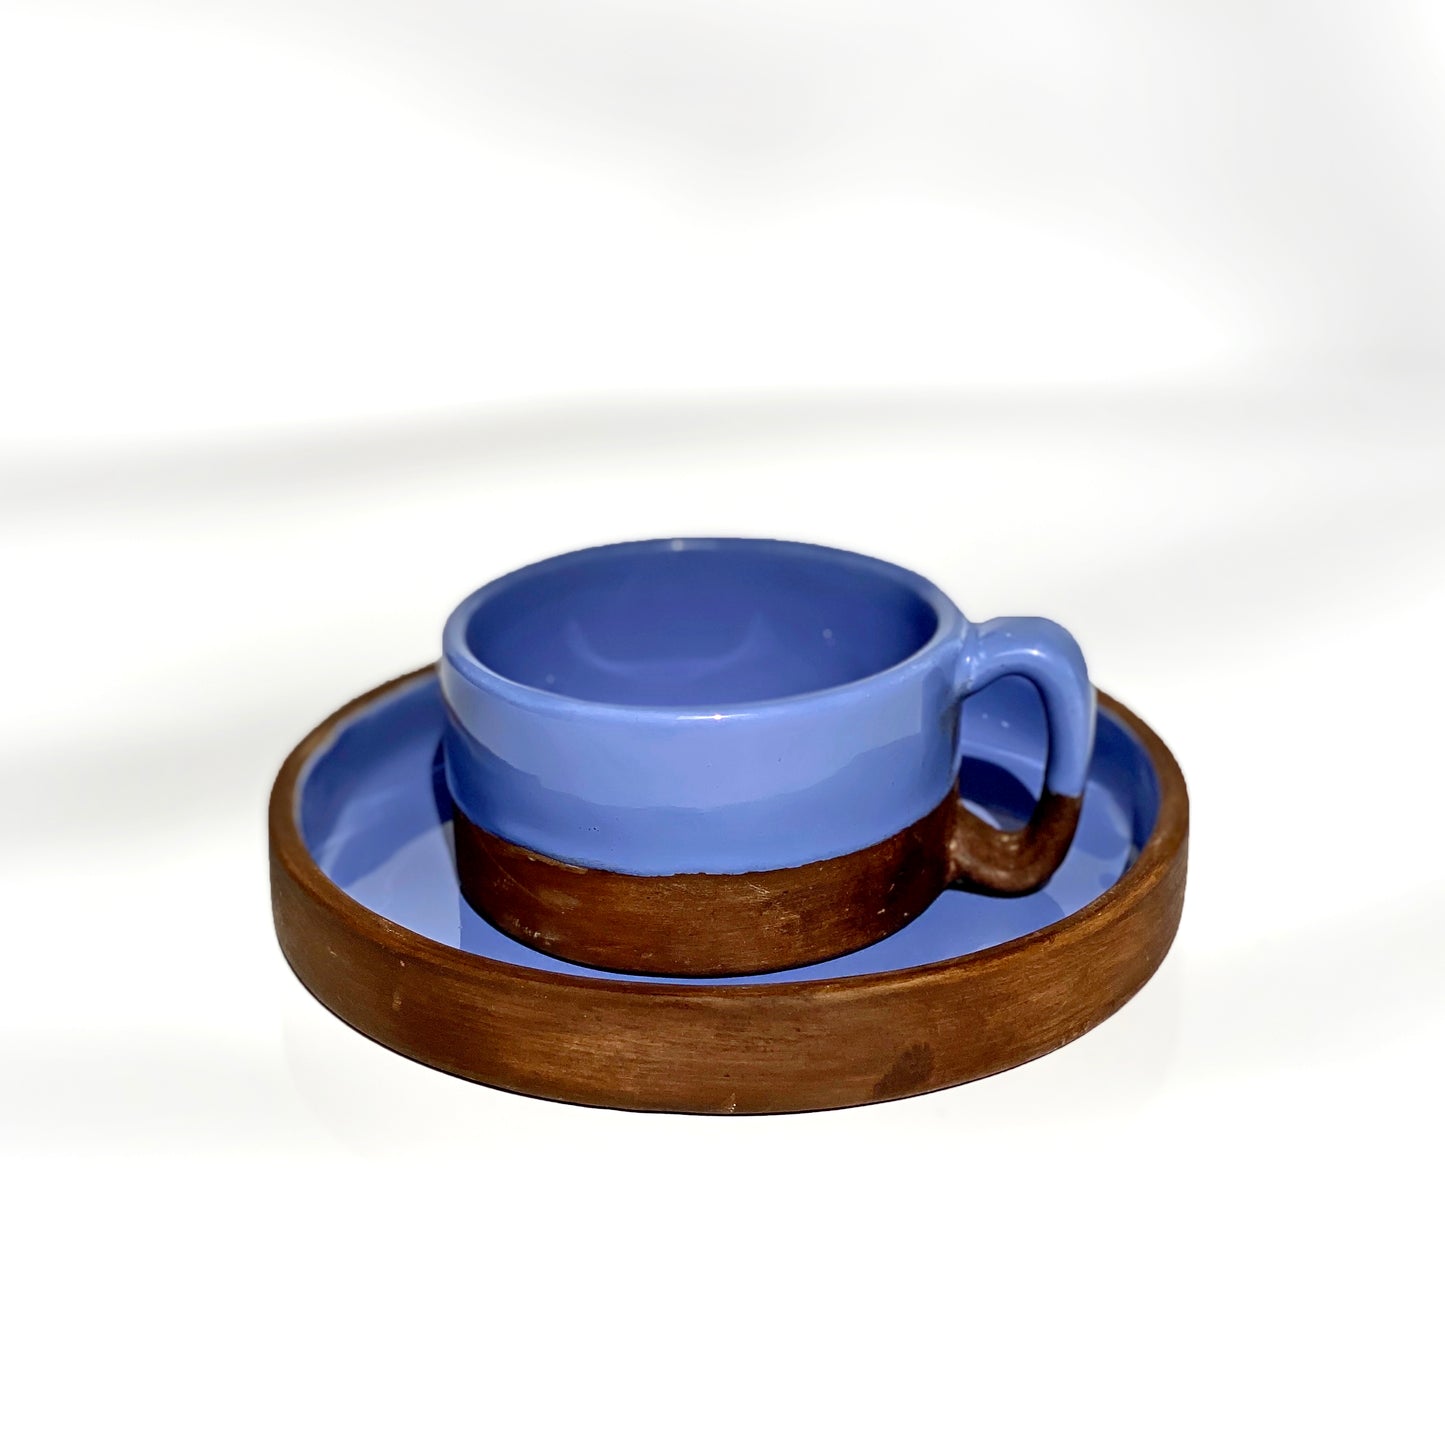 Pink And Purple Ceramic Mug And Plate Set | Hand Made Ceramic Mug And Plate Set